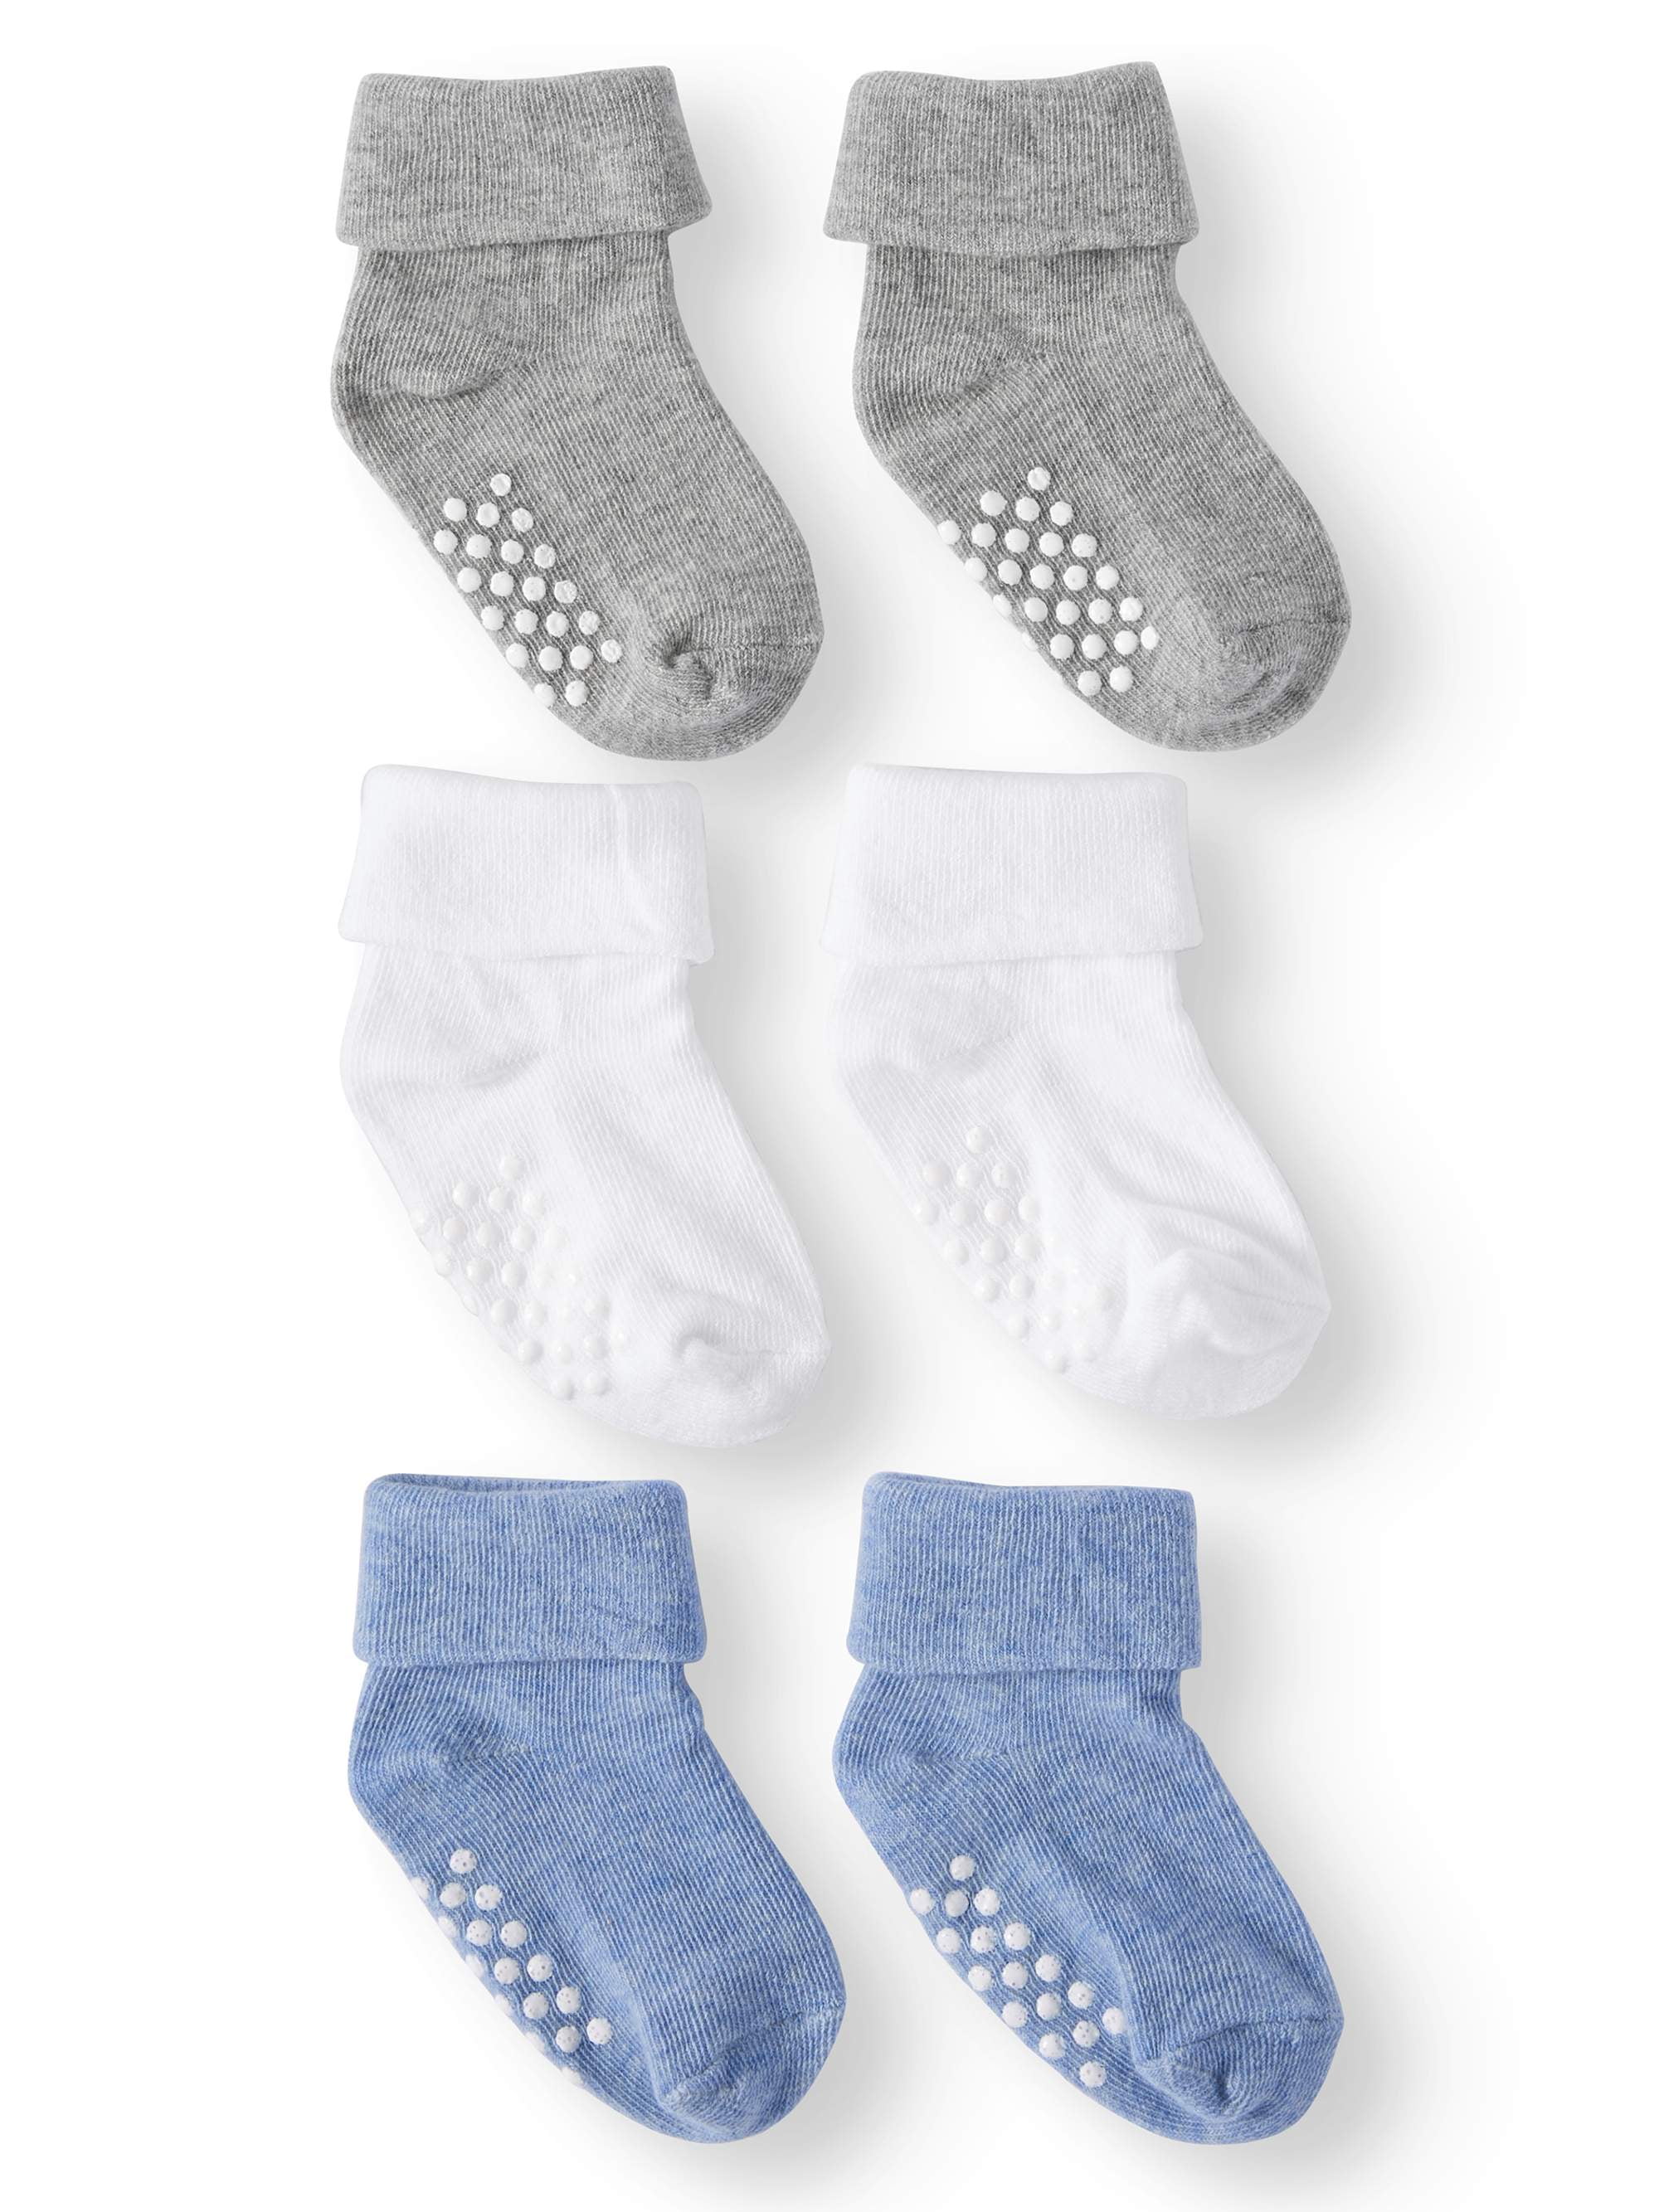 Jefferies Socks Baby Boys Non-Skid Turn Cuff Socks 6 Pair Pack 